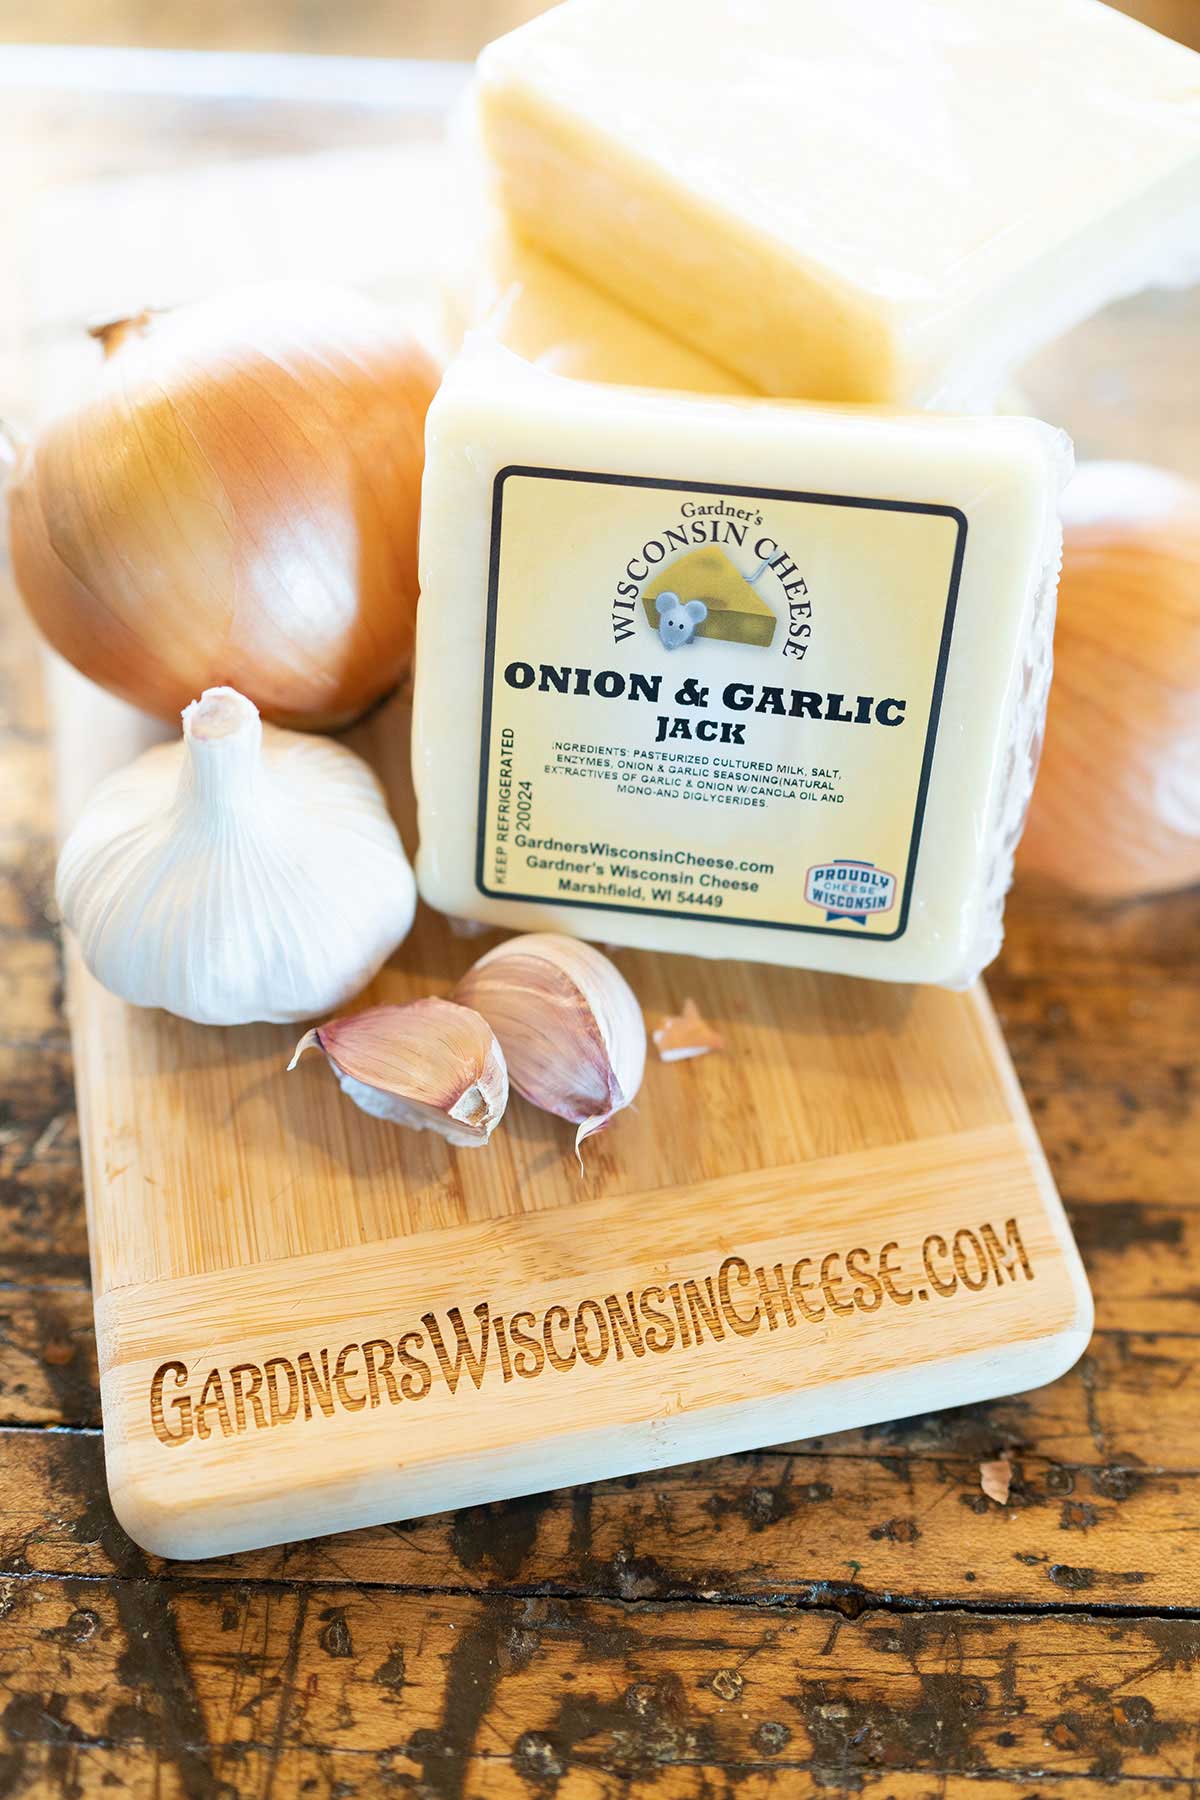 Onion & Garlic Jack - Gardners Wisconsin Cheese and Sausage